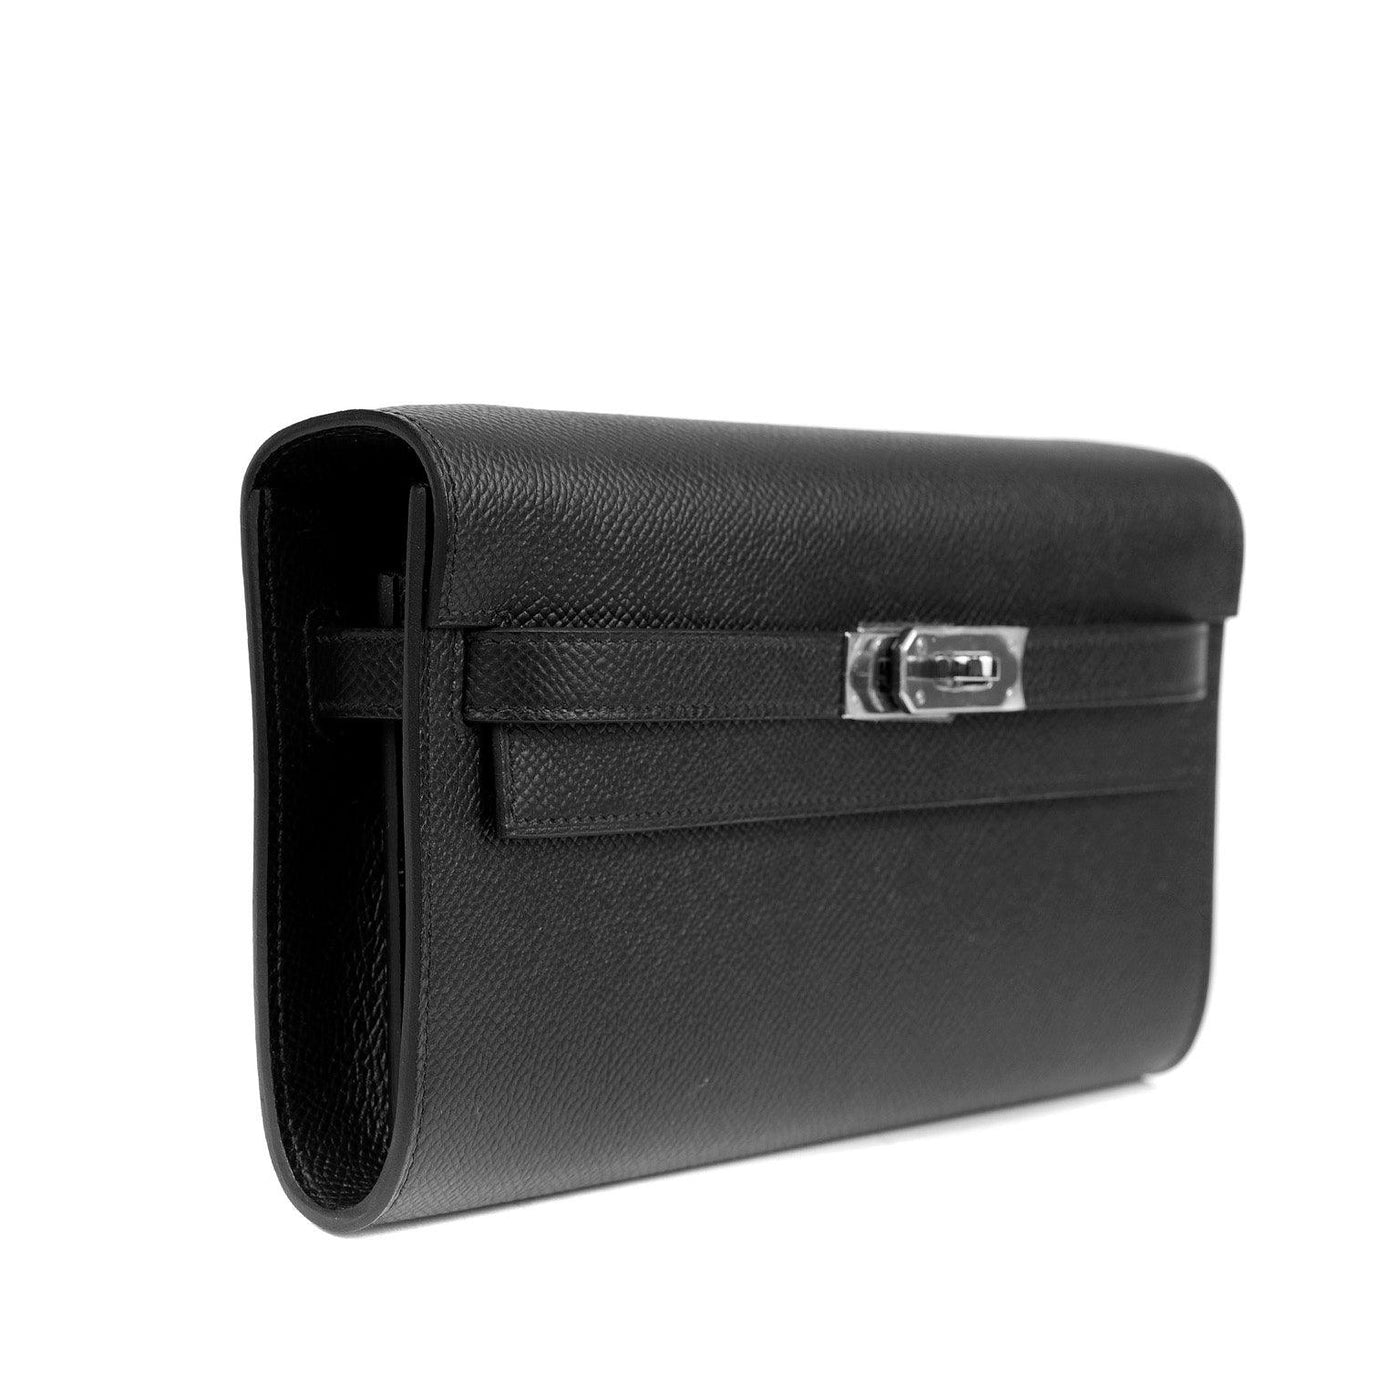 Hermès Black Epsom Kelly To Go Wallet - Only Authentics